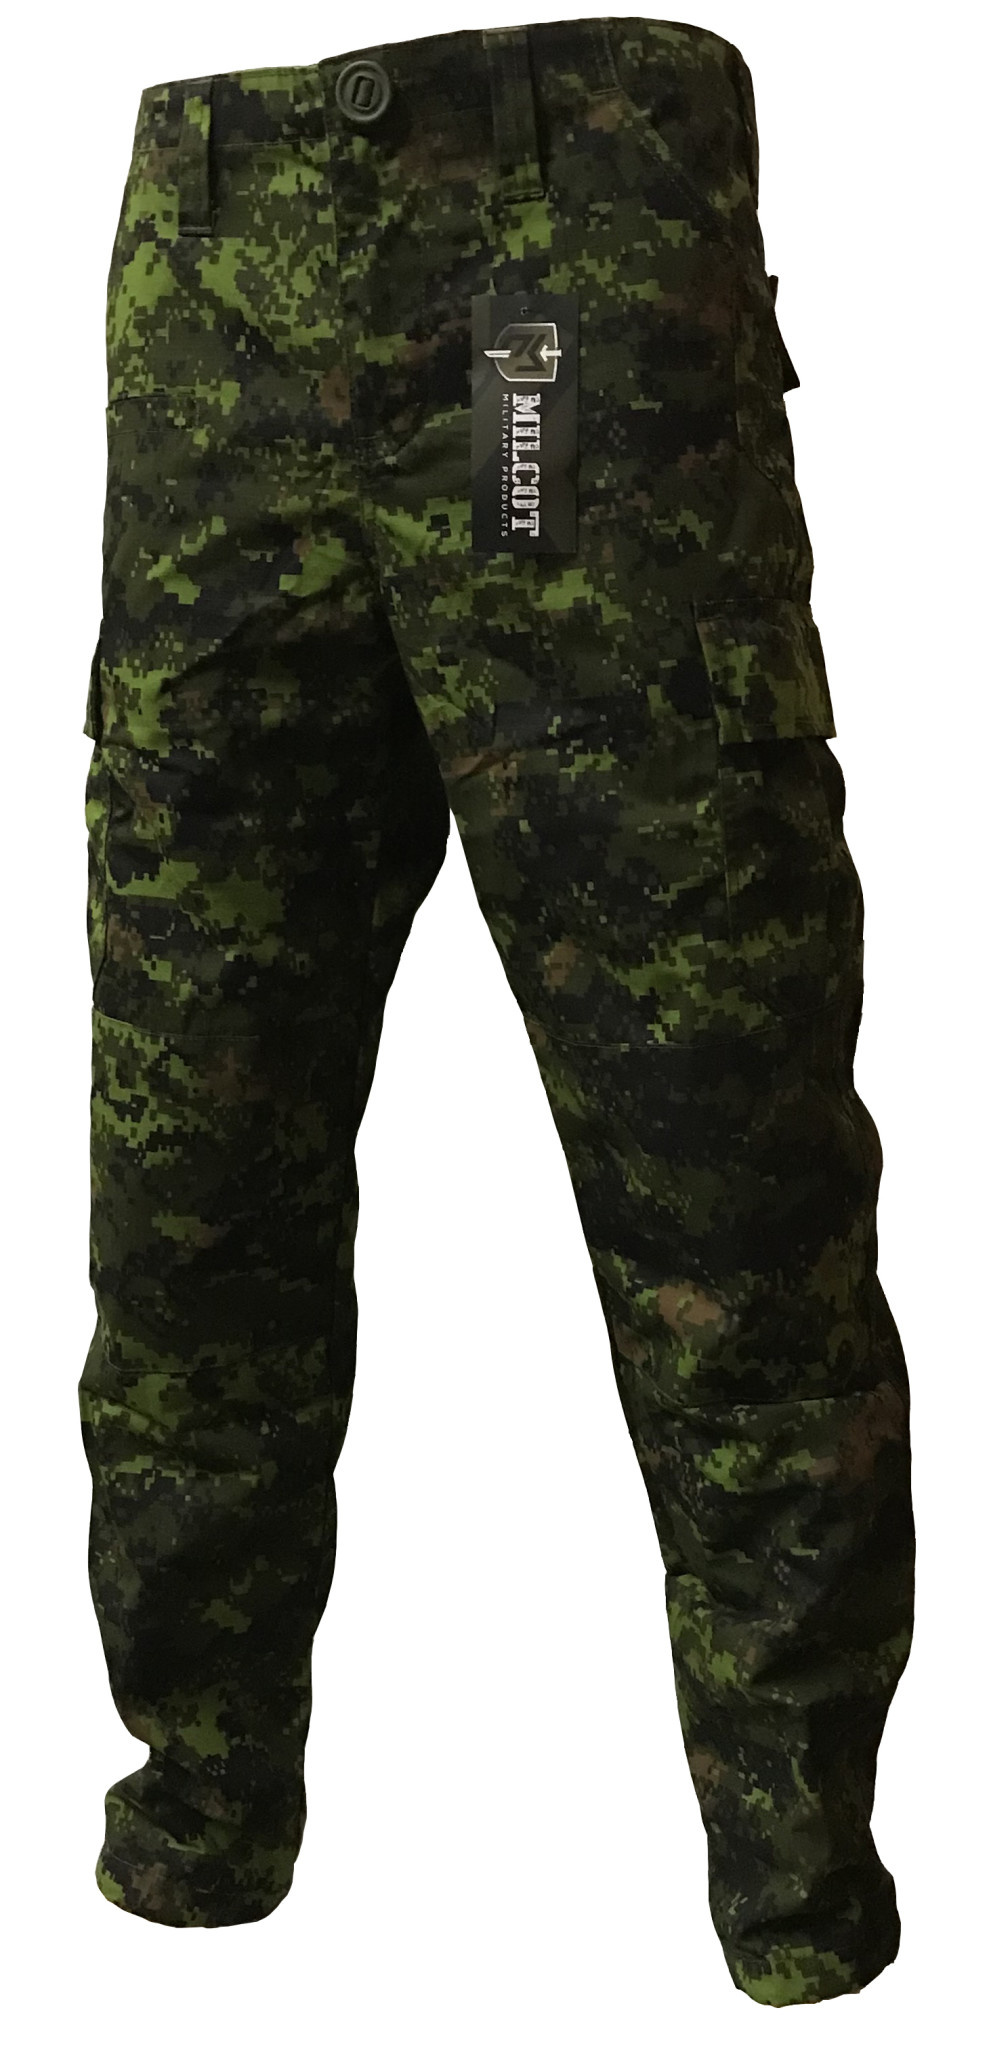 https://cdn.shoplightspeed.com/shops/616834/files/46736781/milcot-military-military-pants-gen-ii-canadian-cad.jpg